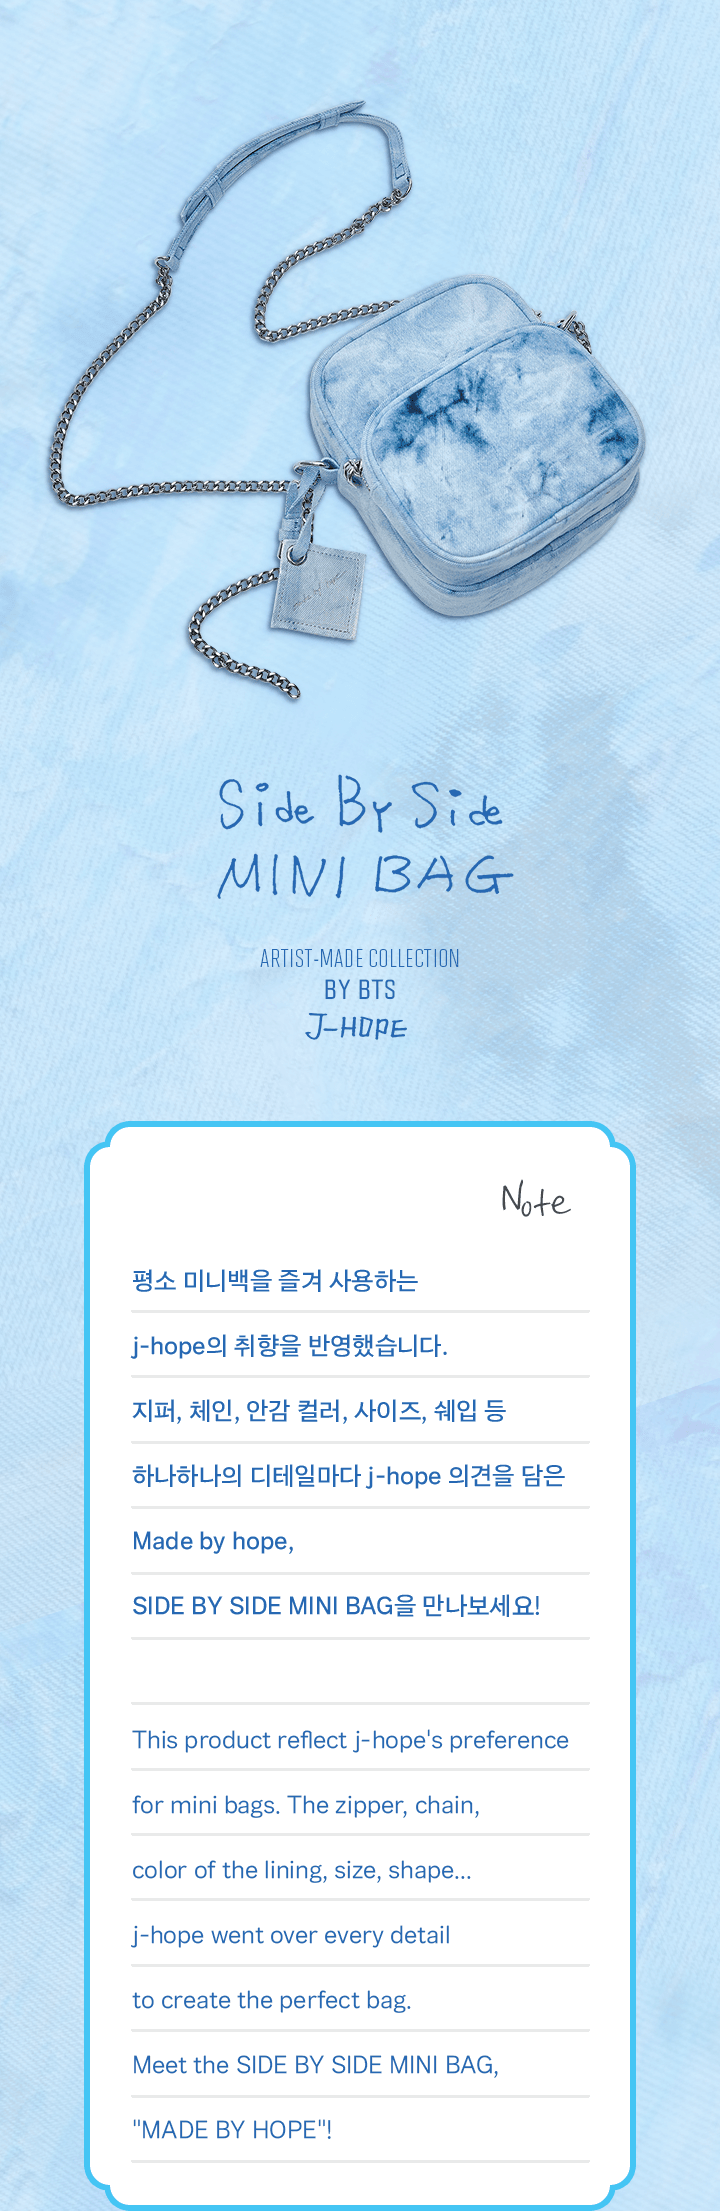 ARTIST-MADE COLLECTION BY BTS j-hope Mini Bag  | UK Kpop Shop